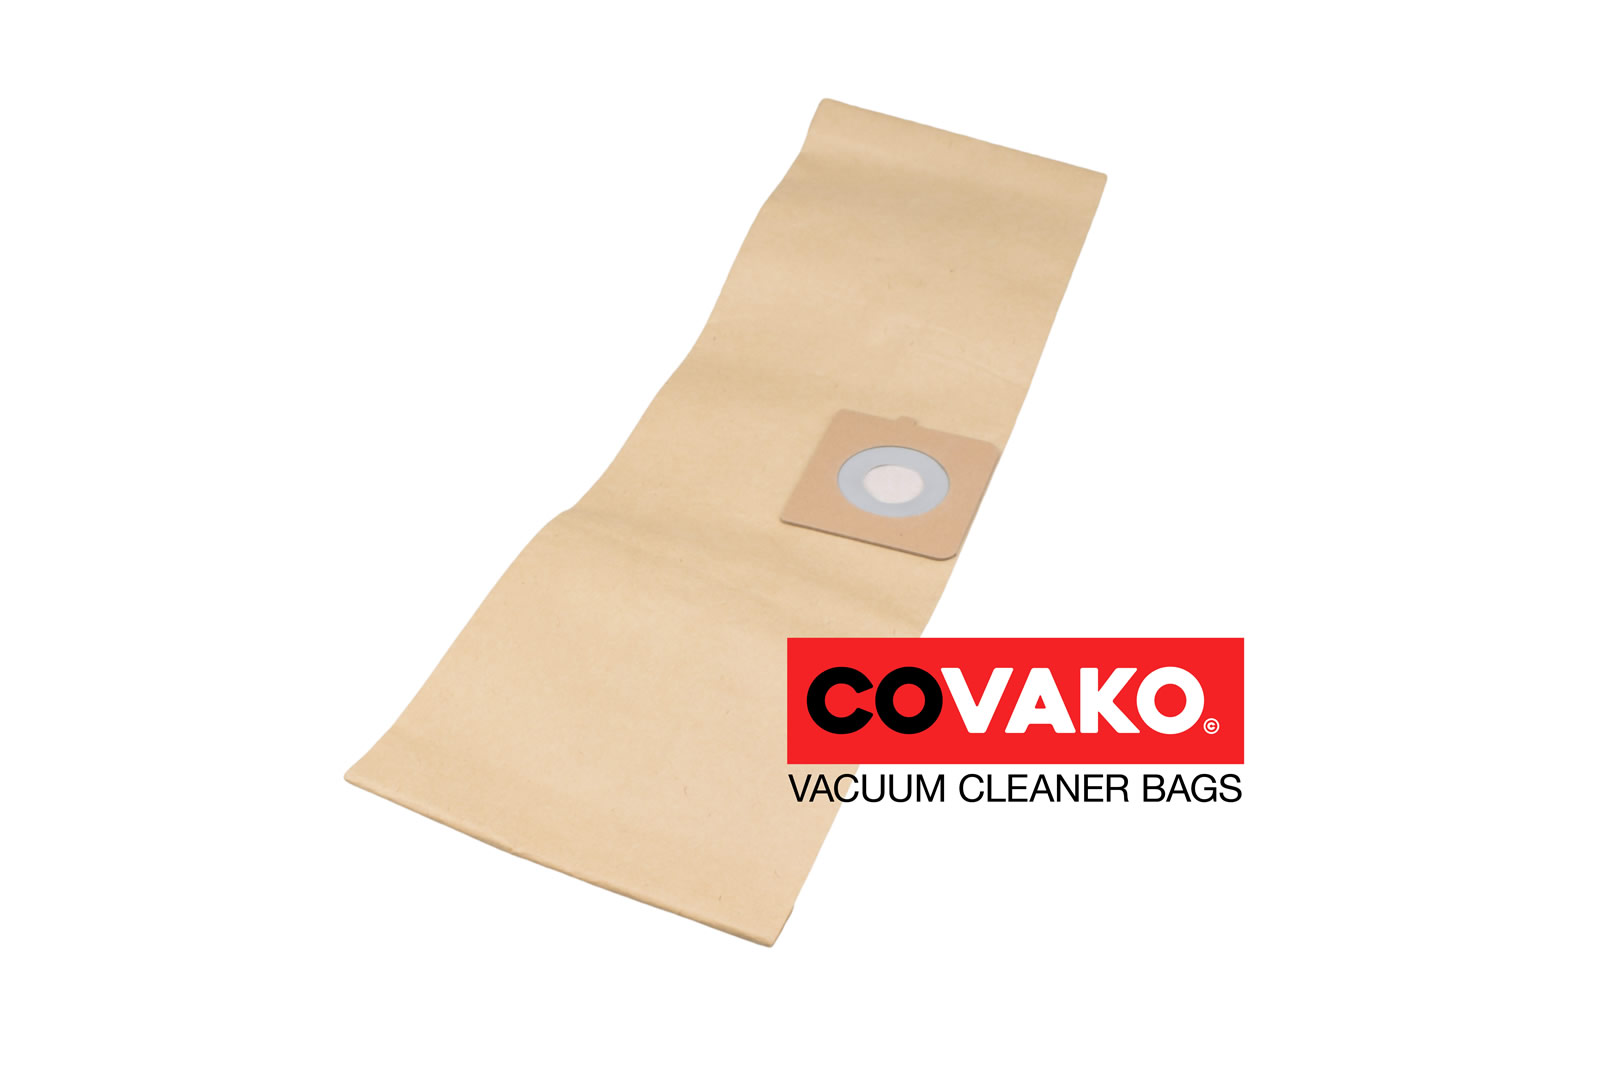 Clean a la Card Silent 15 / Paper - Clean a la Card vacuum cleaner bags